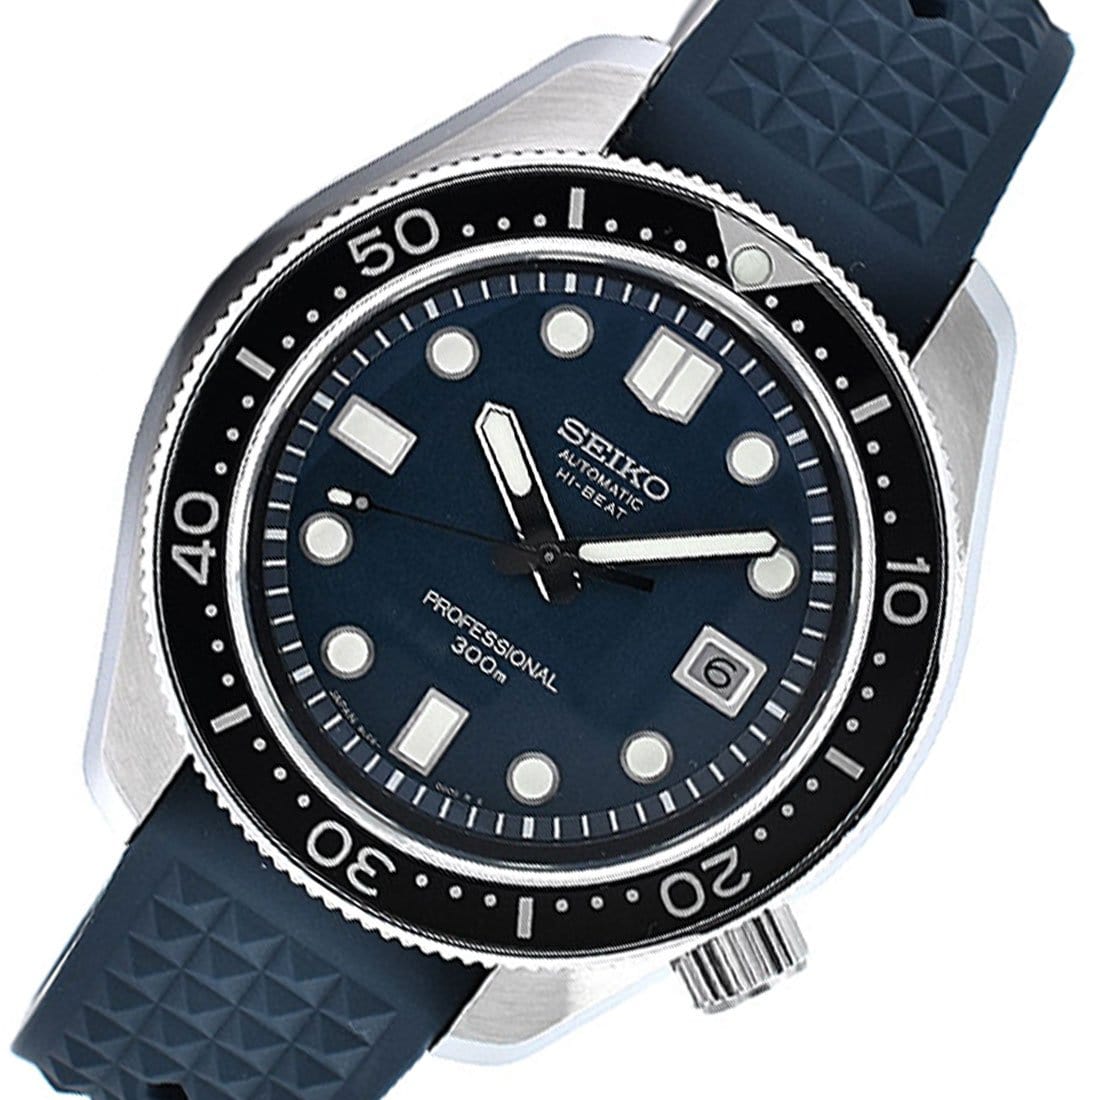 Seiko SBEX011 SLA039 SLA039J SLA039J1 Prospex 55th Anniversary Limited Edition JDM Watch